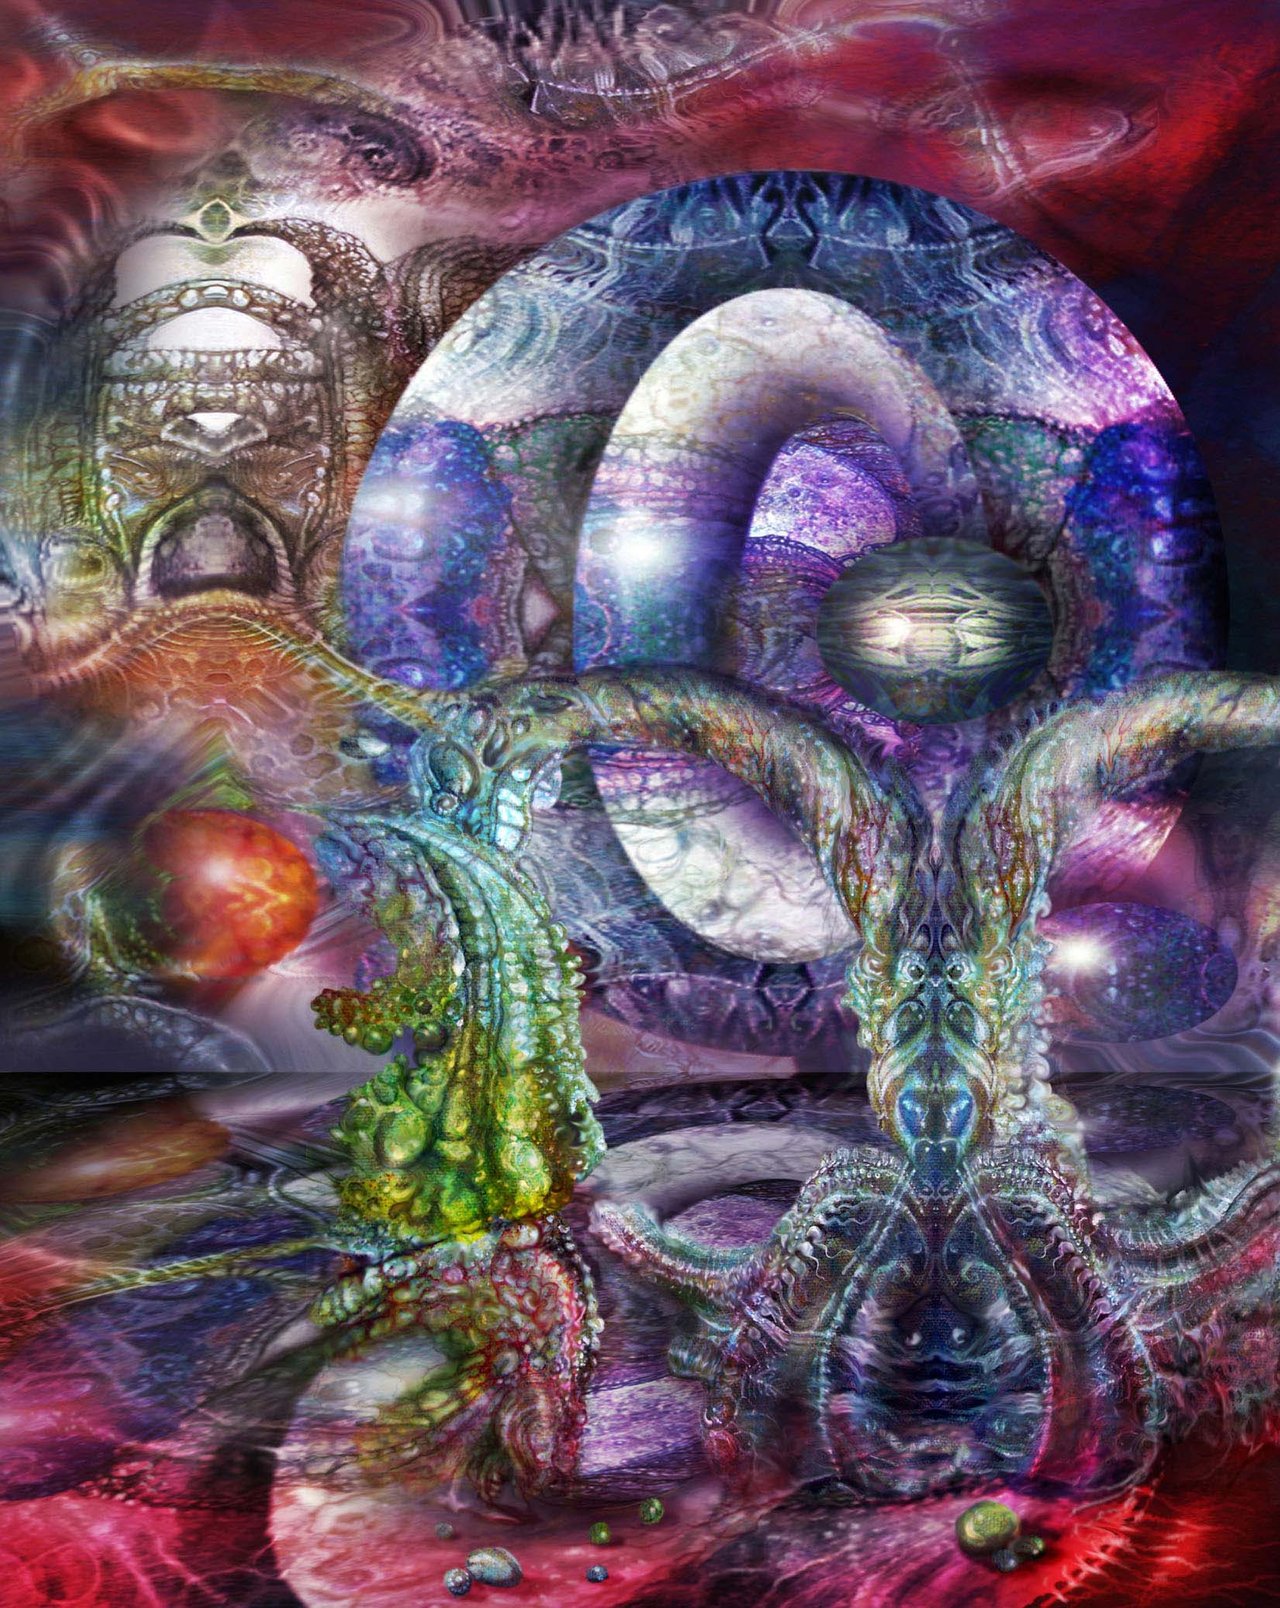 Deep Dream and GIF Creator - Art Of The Mystic Otto Rapp